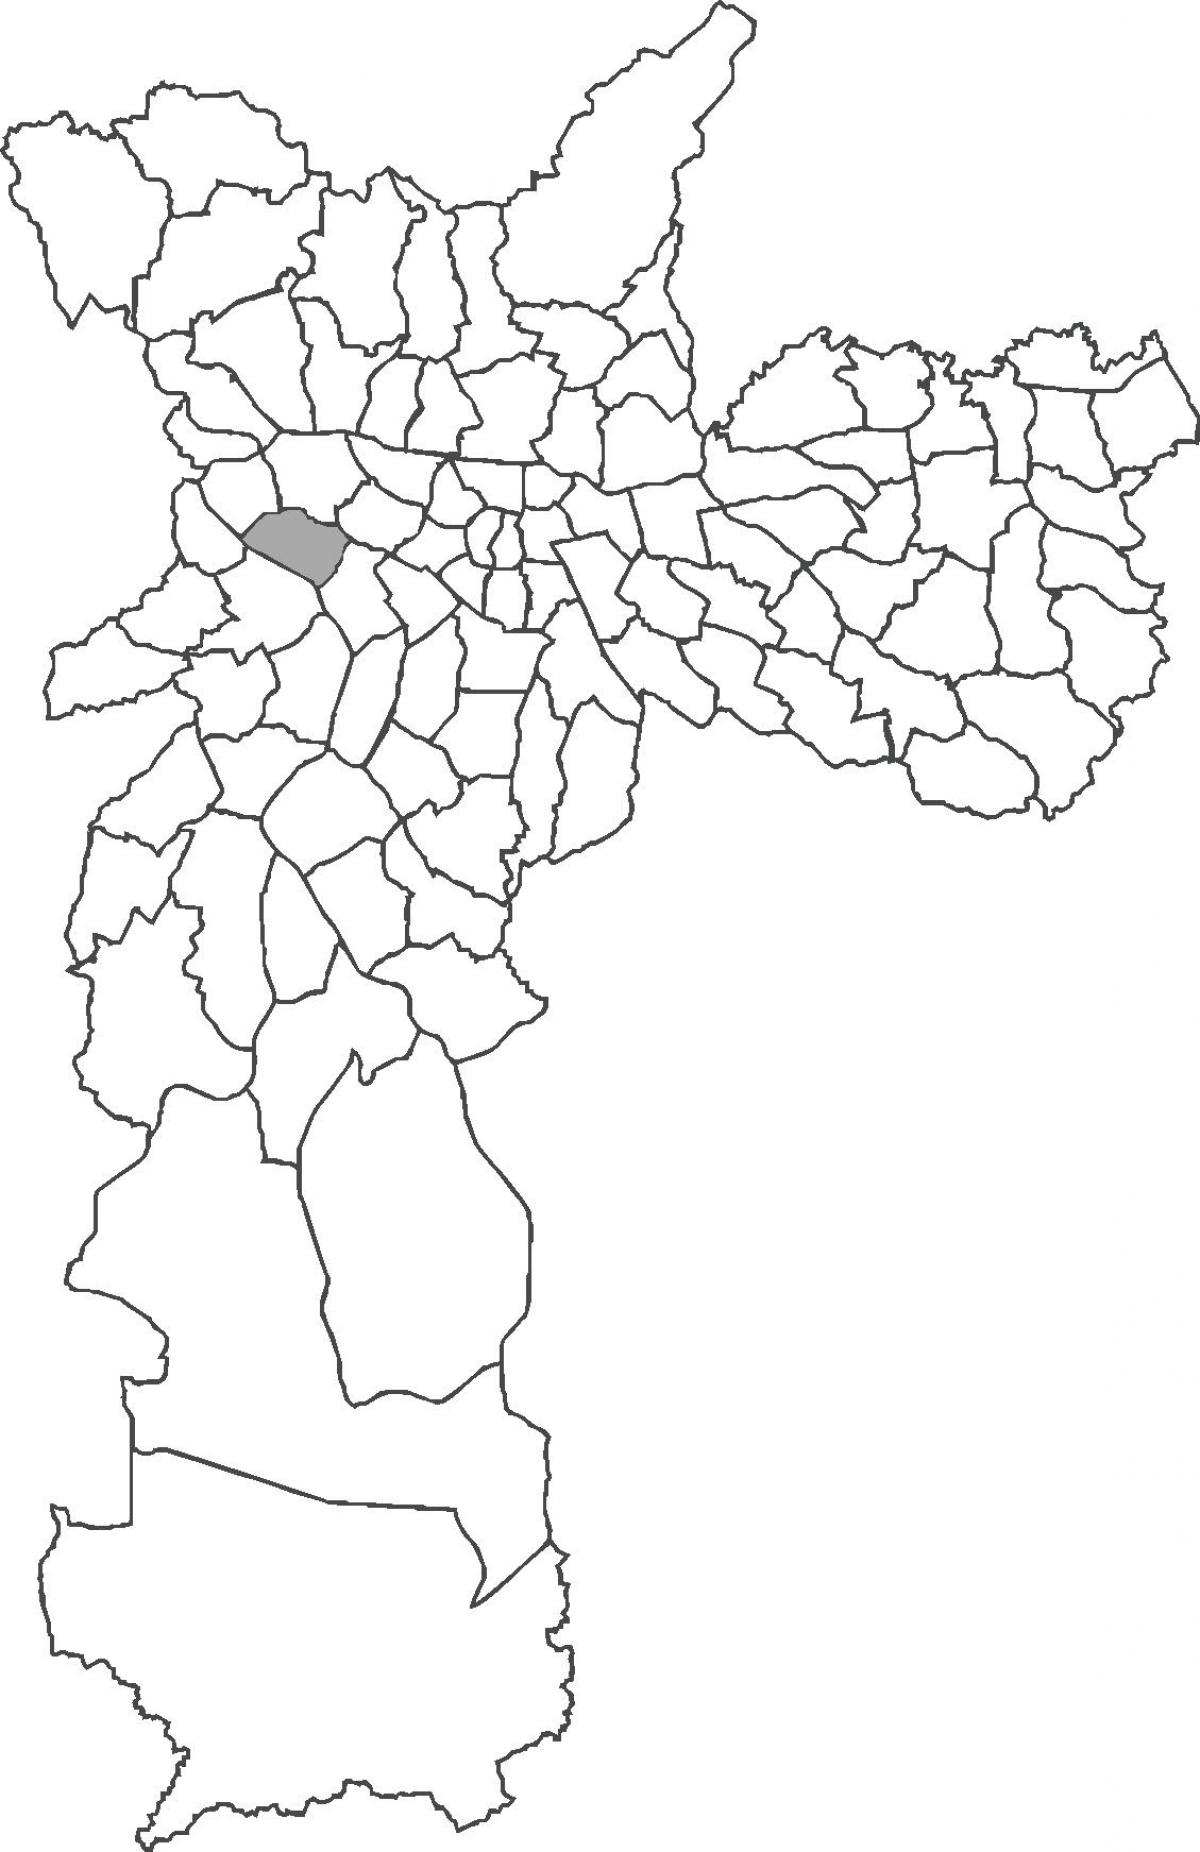 Zemljevid Alto de Pinheiros okrožno